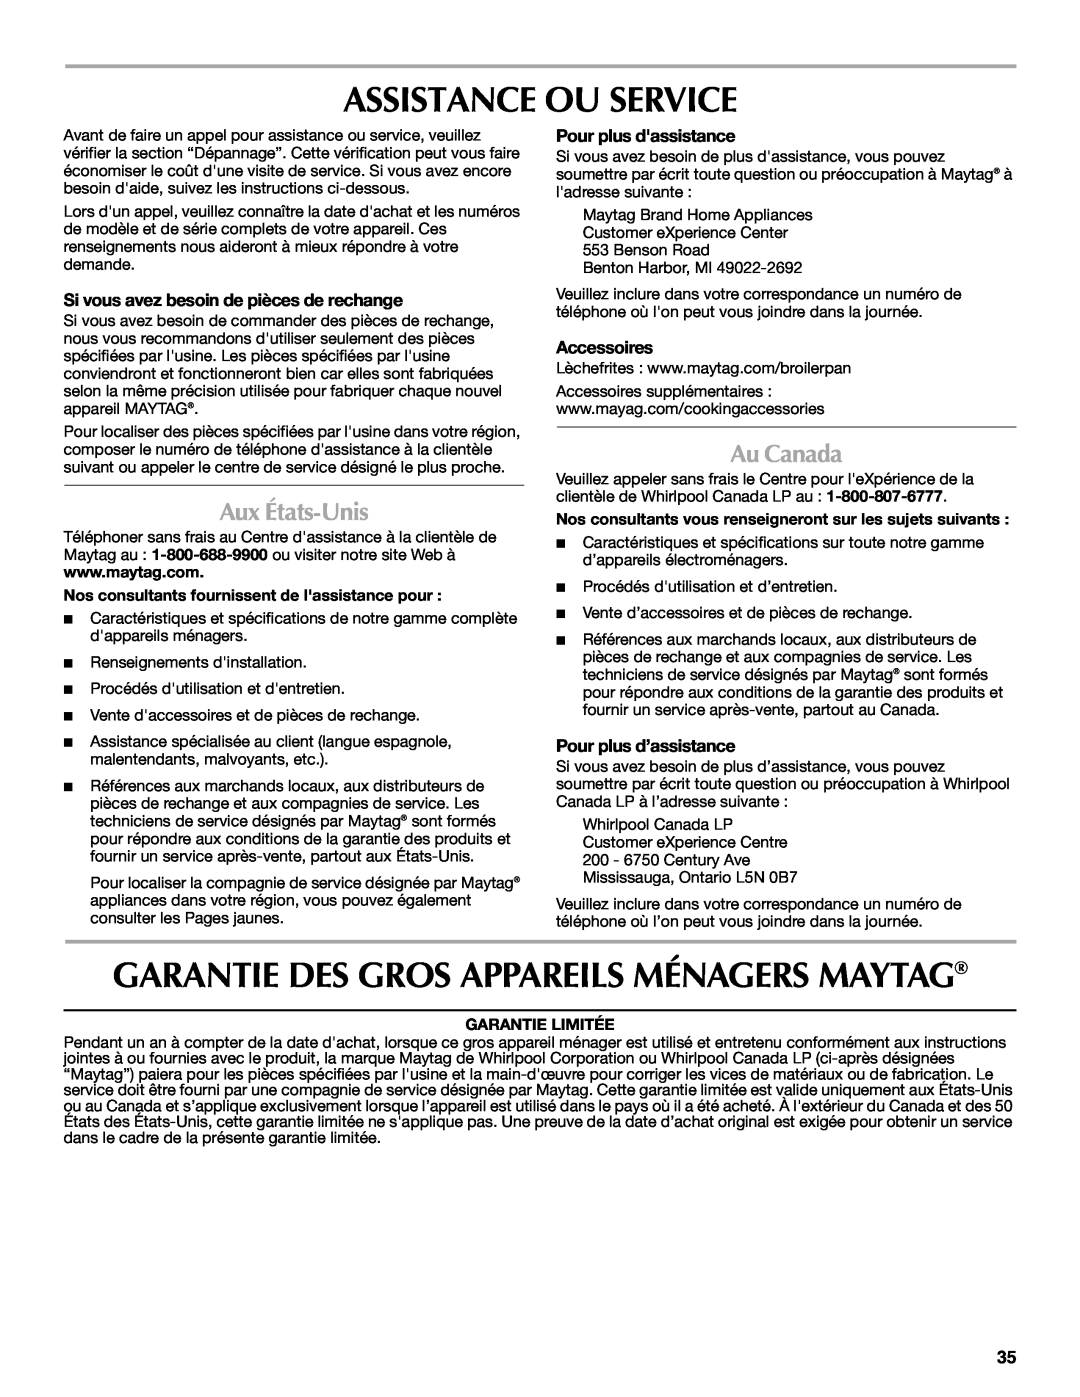 Maytag W10430917A manual Assistance Ou Service, Garantie Des Gros Appareils Ménagers Maytag, Aux États-Unis, Au Canada 